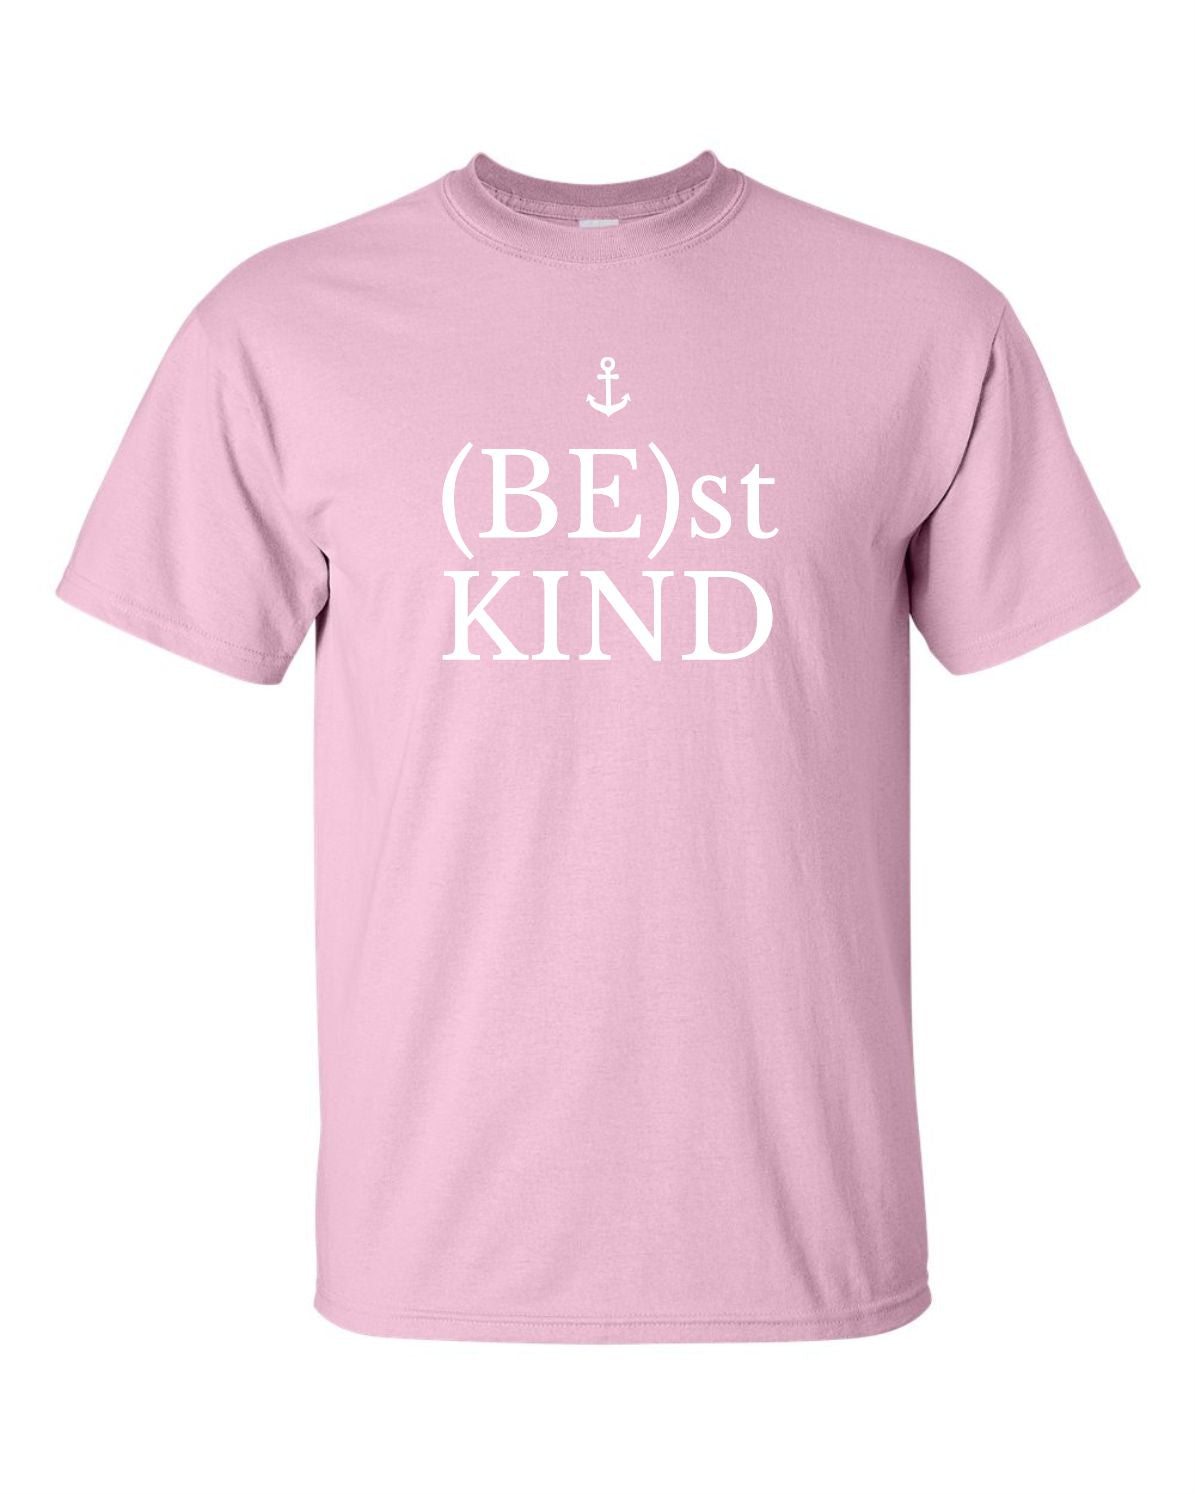 "(BE)st KIND" Unisex T-shirt